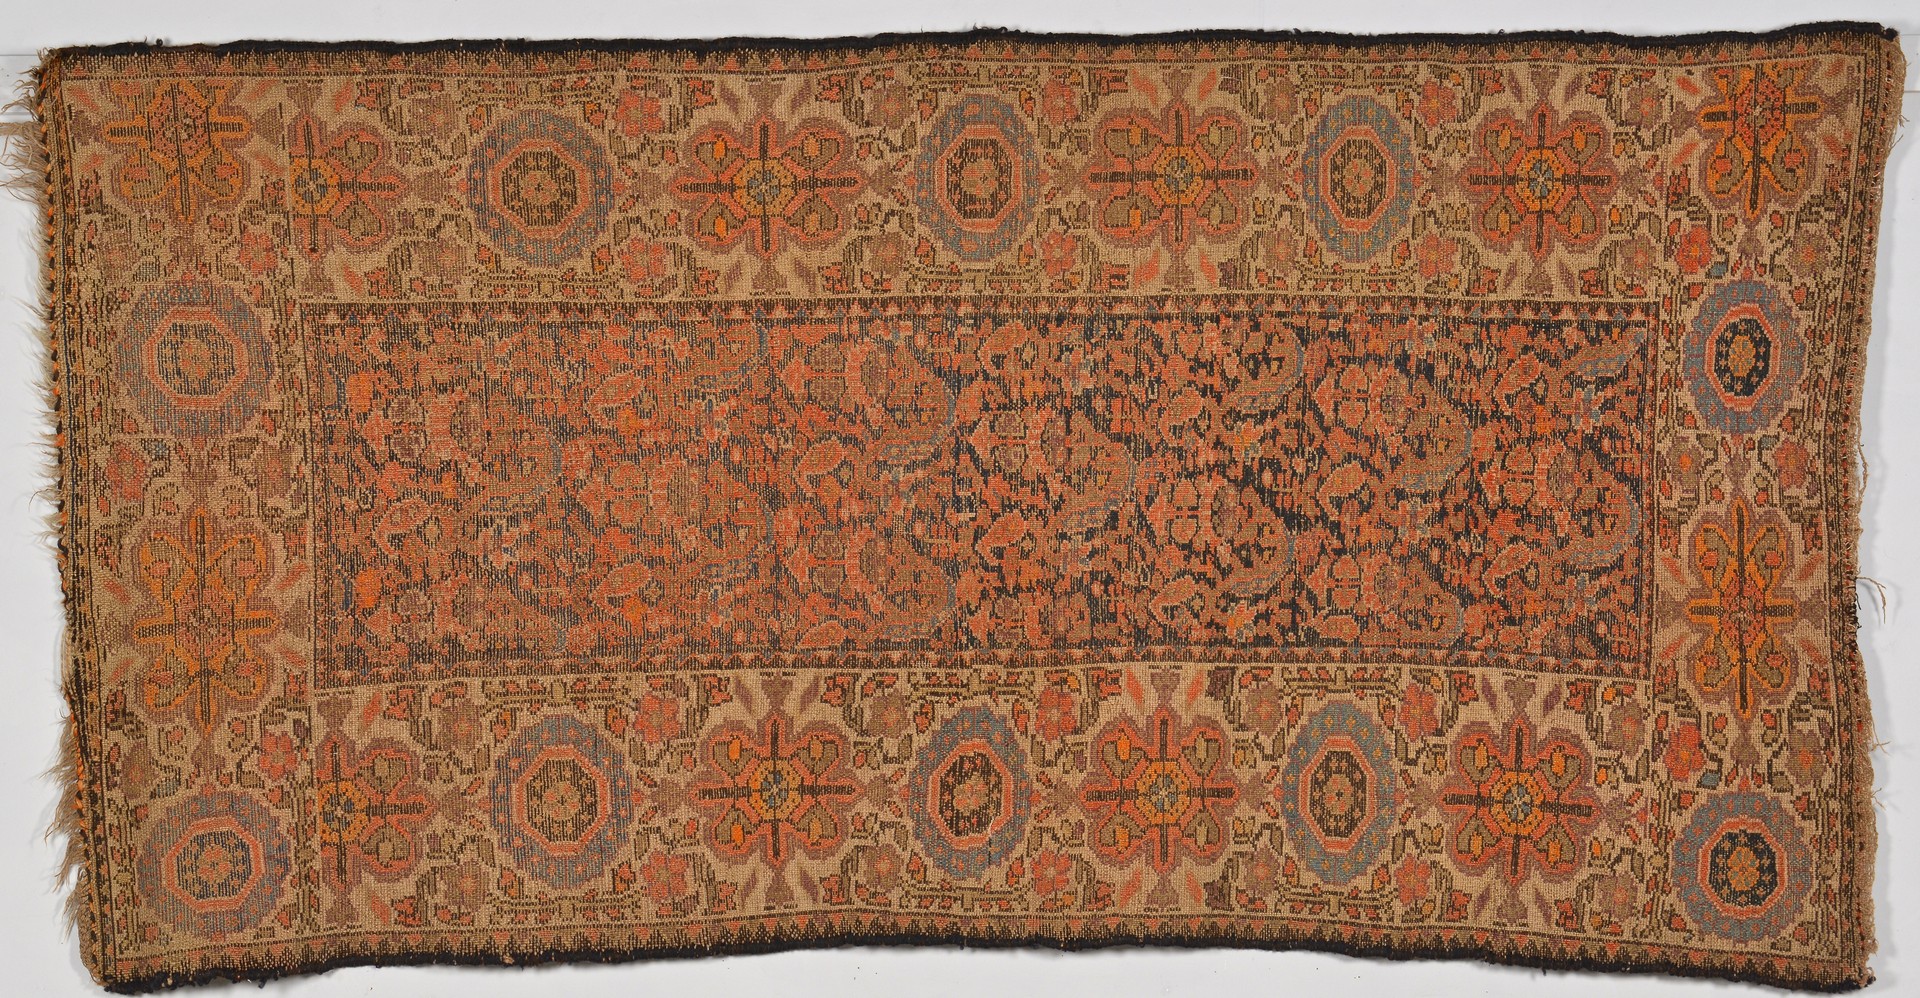 Lot 917: Kurdish area rug, early 20th century